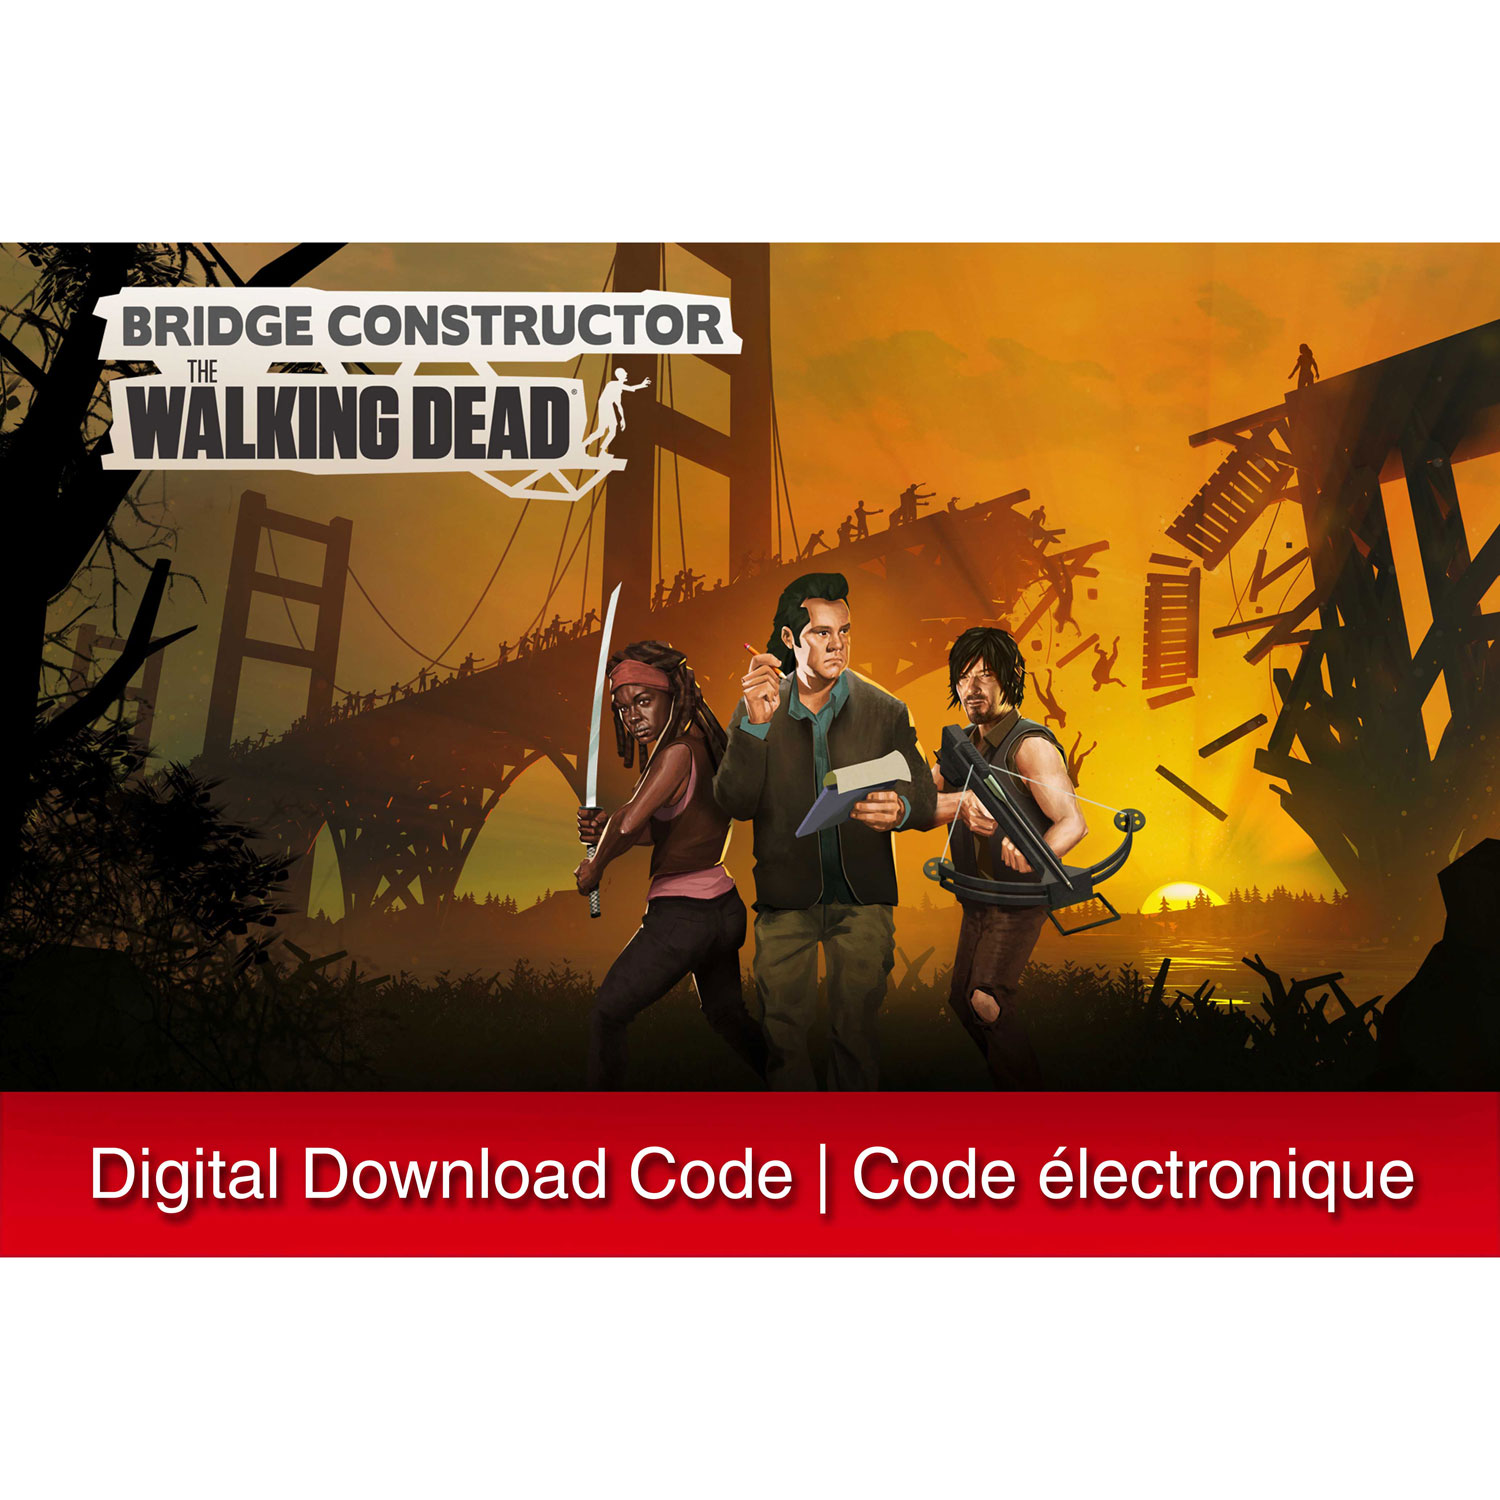 Bridge Constructor: The Walking Dead (Switch) - Digital Download